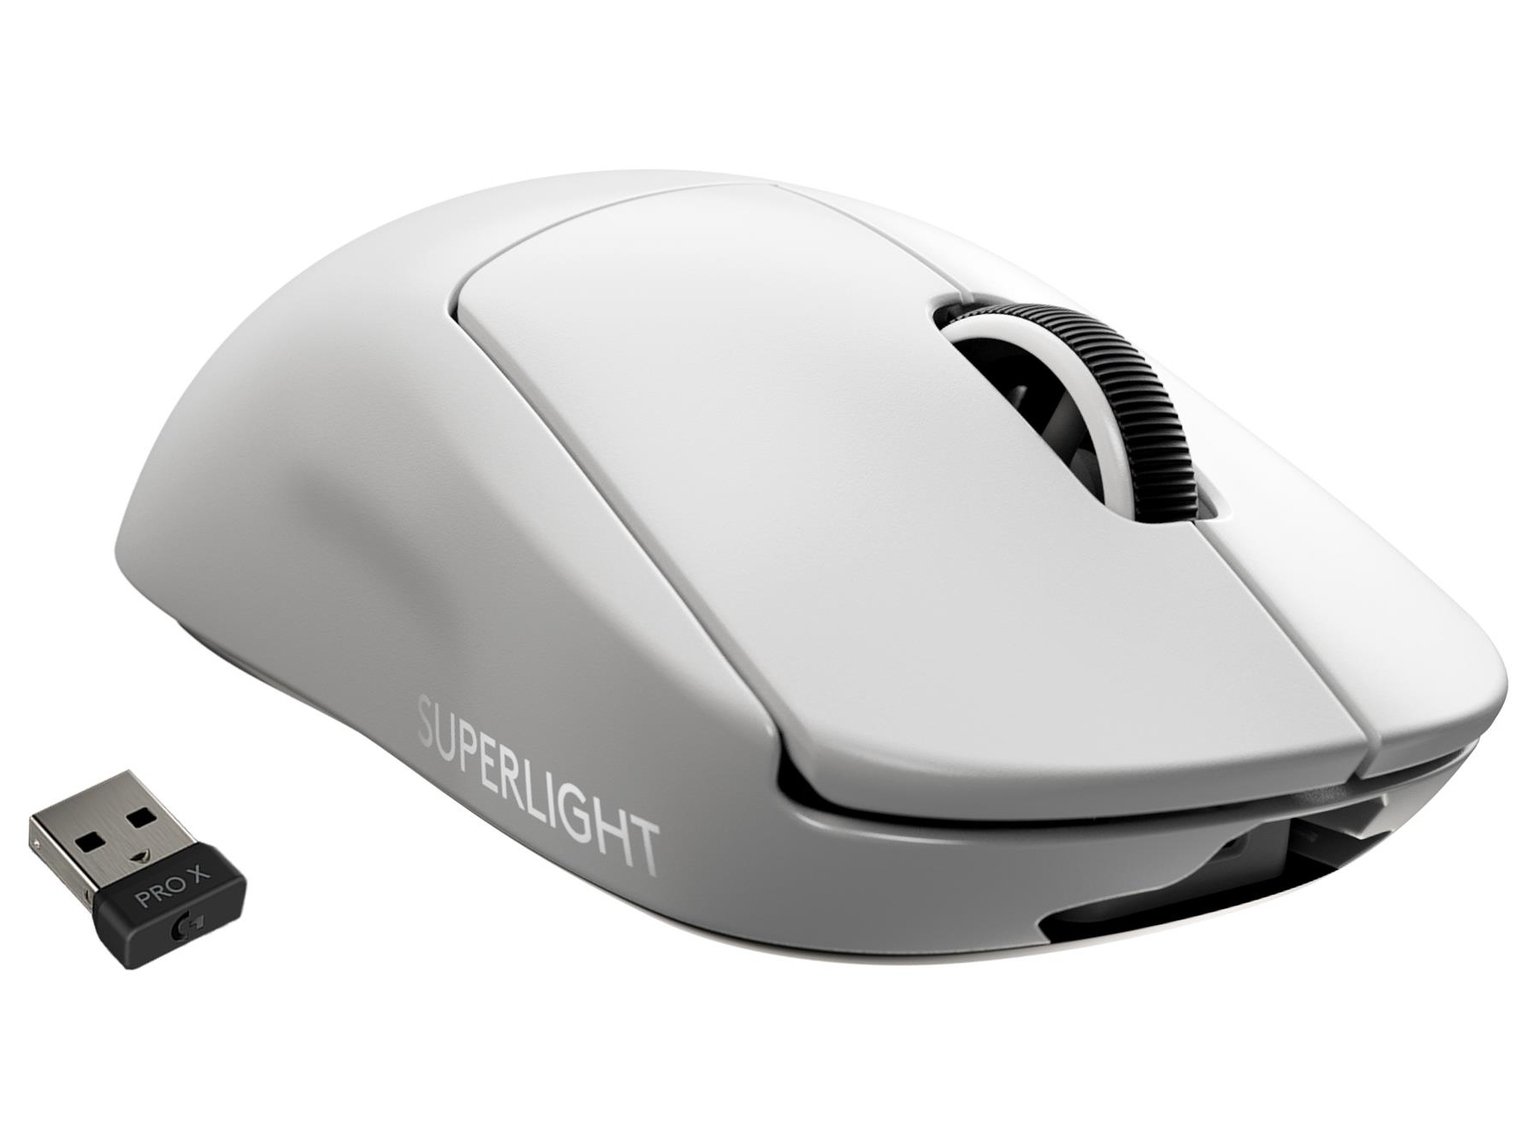 Logitech Pro X Superlight Wireless Mouse - White